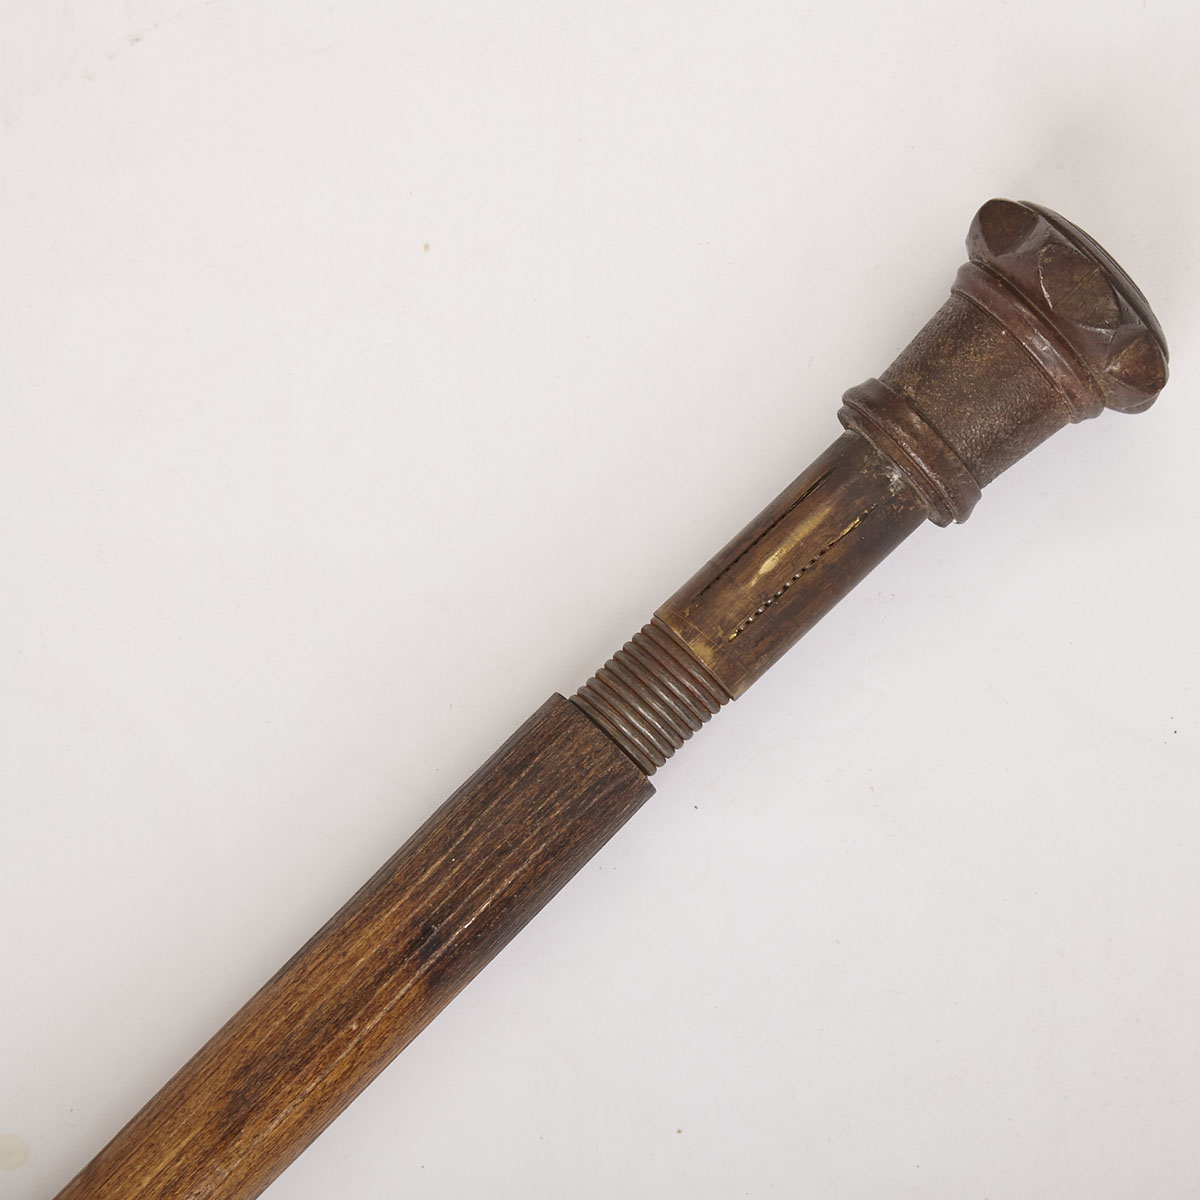 Victorian Brass Mounted Elm Bludgeon Flail Gadget Cane, 19th century